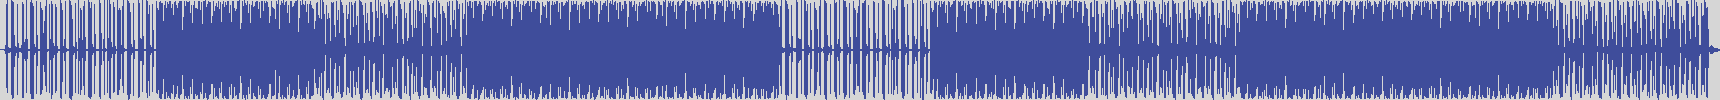 nf_boyz_records [NFY074] Baby Maluma Dj - Octopus [Original Mix] audio wave form